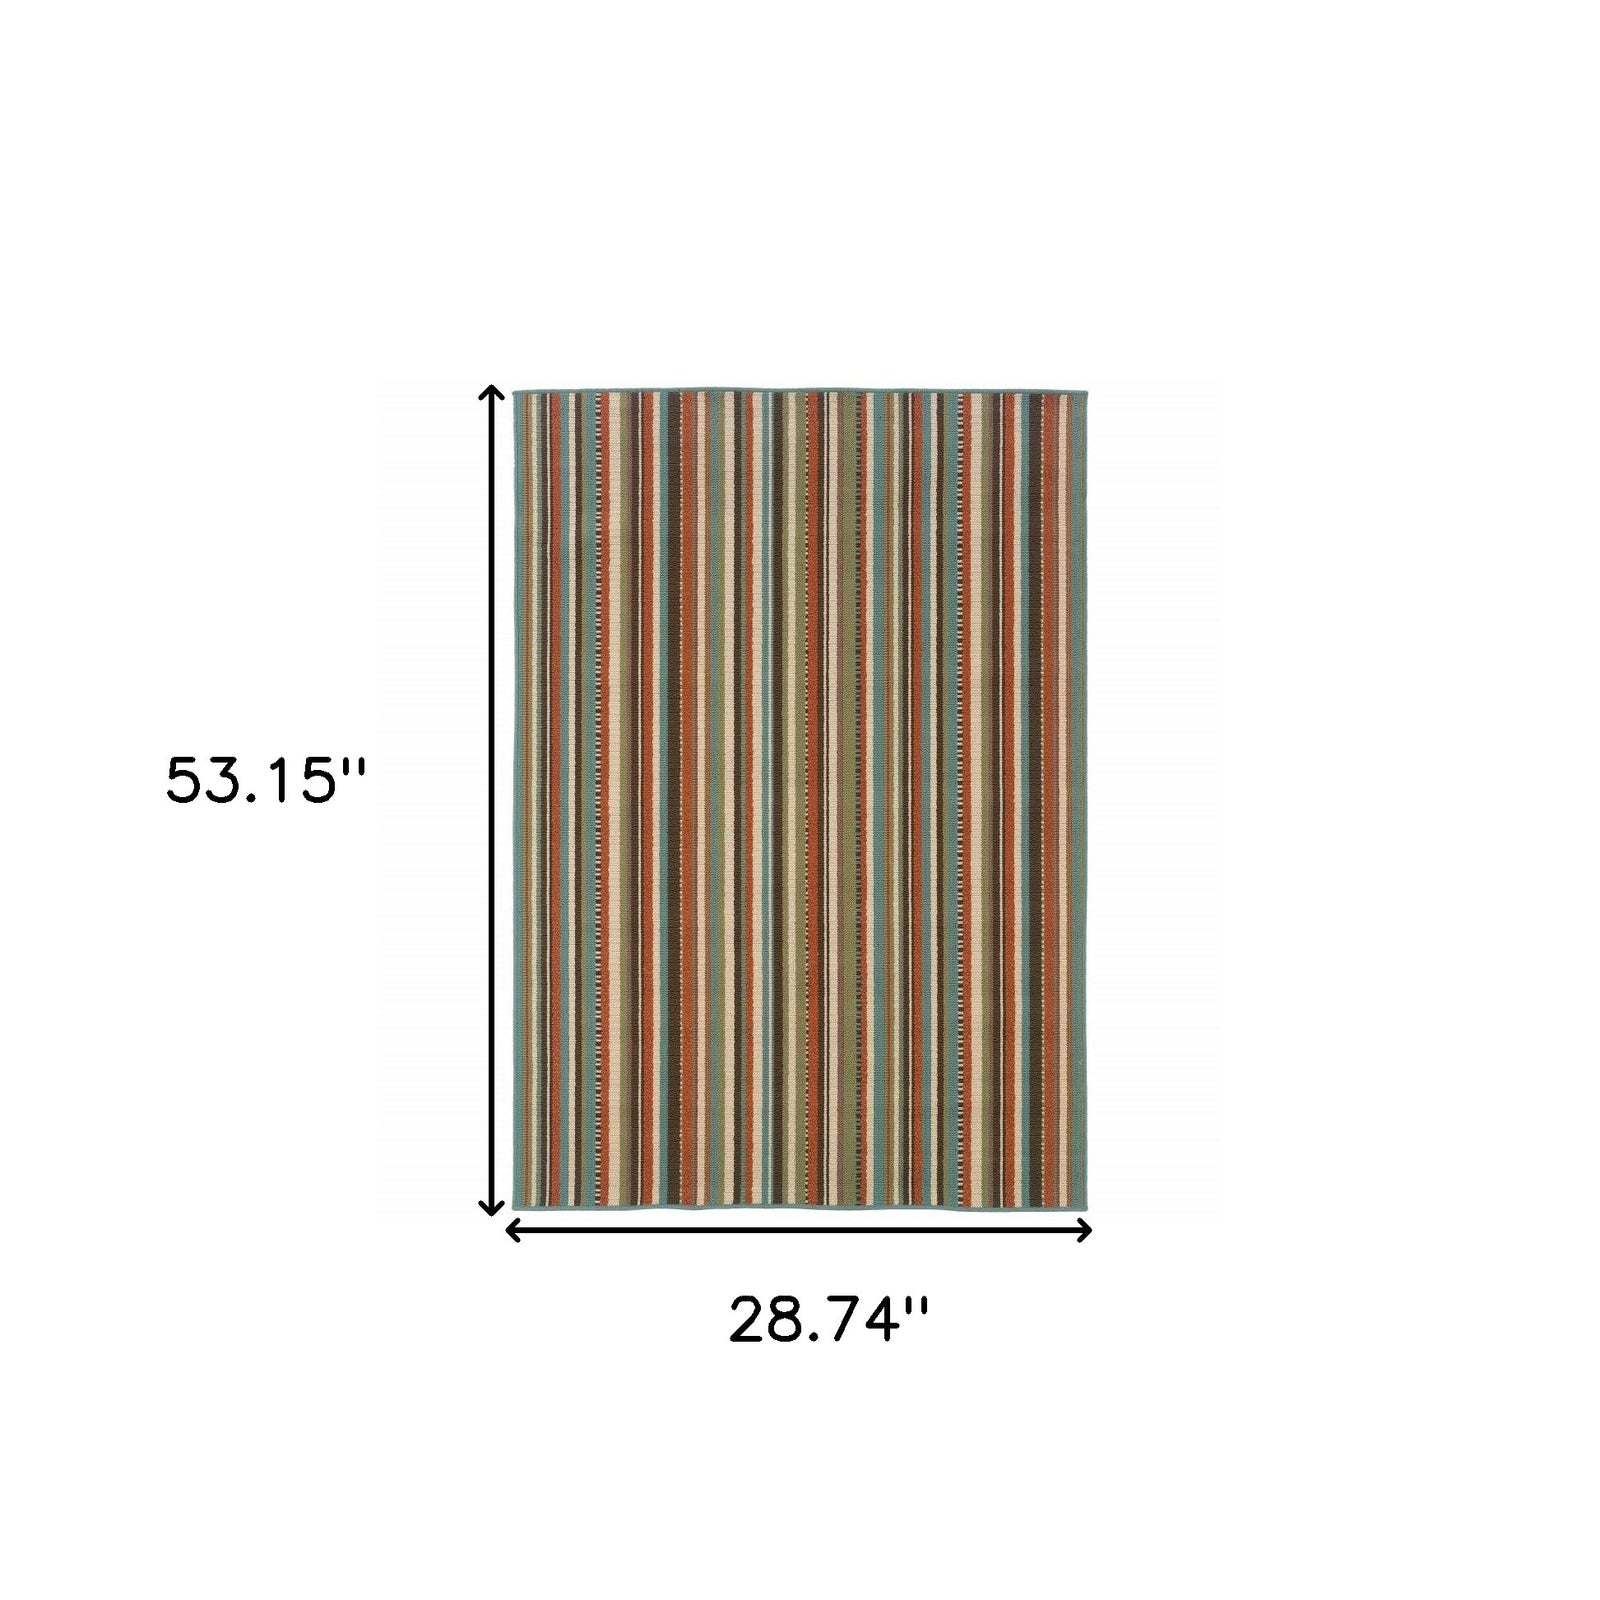 2’X8’ Green And Brown Striped Indoor Outdoor Runner Rug